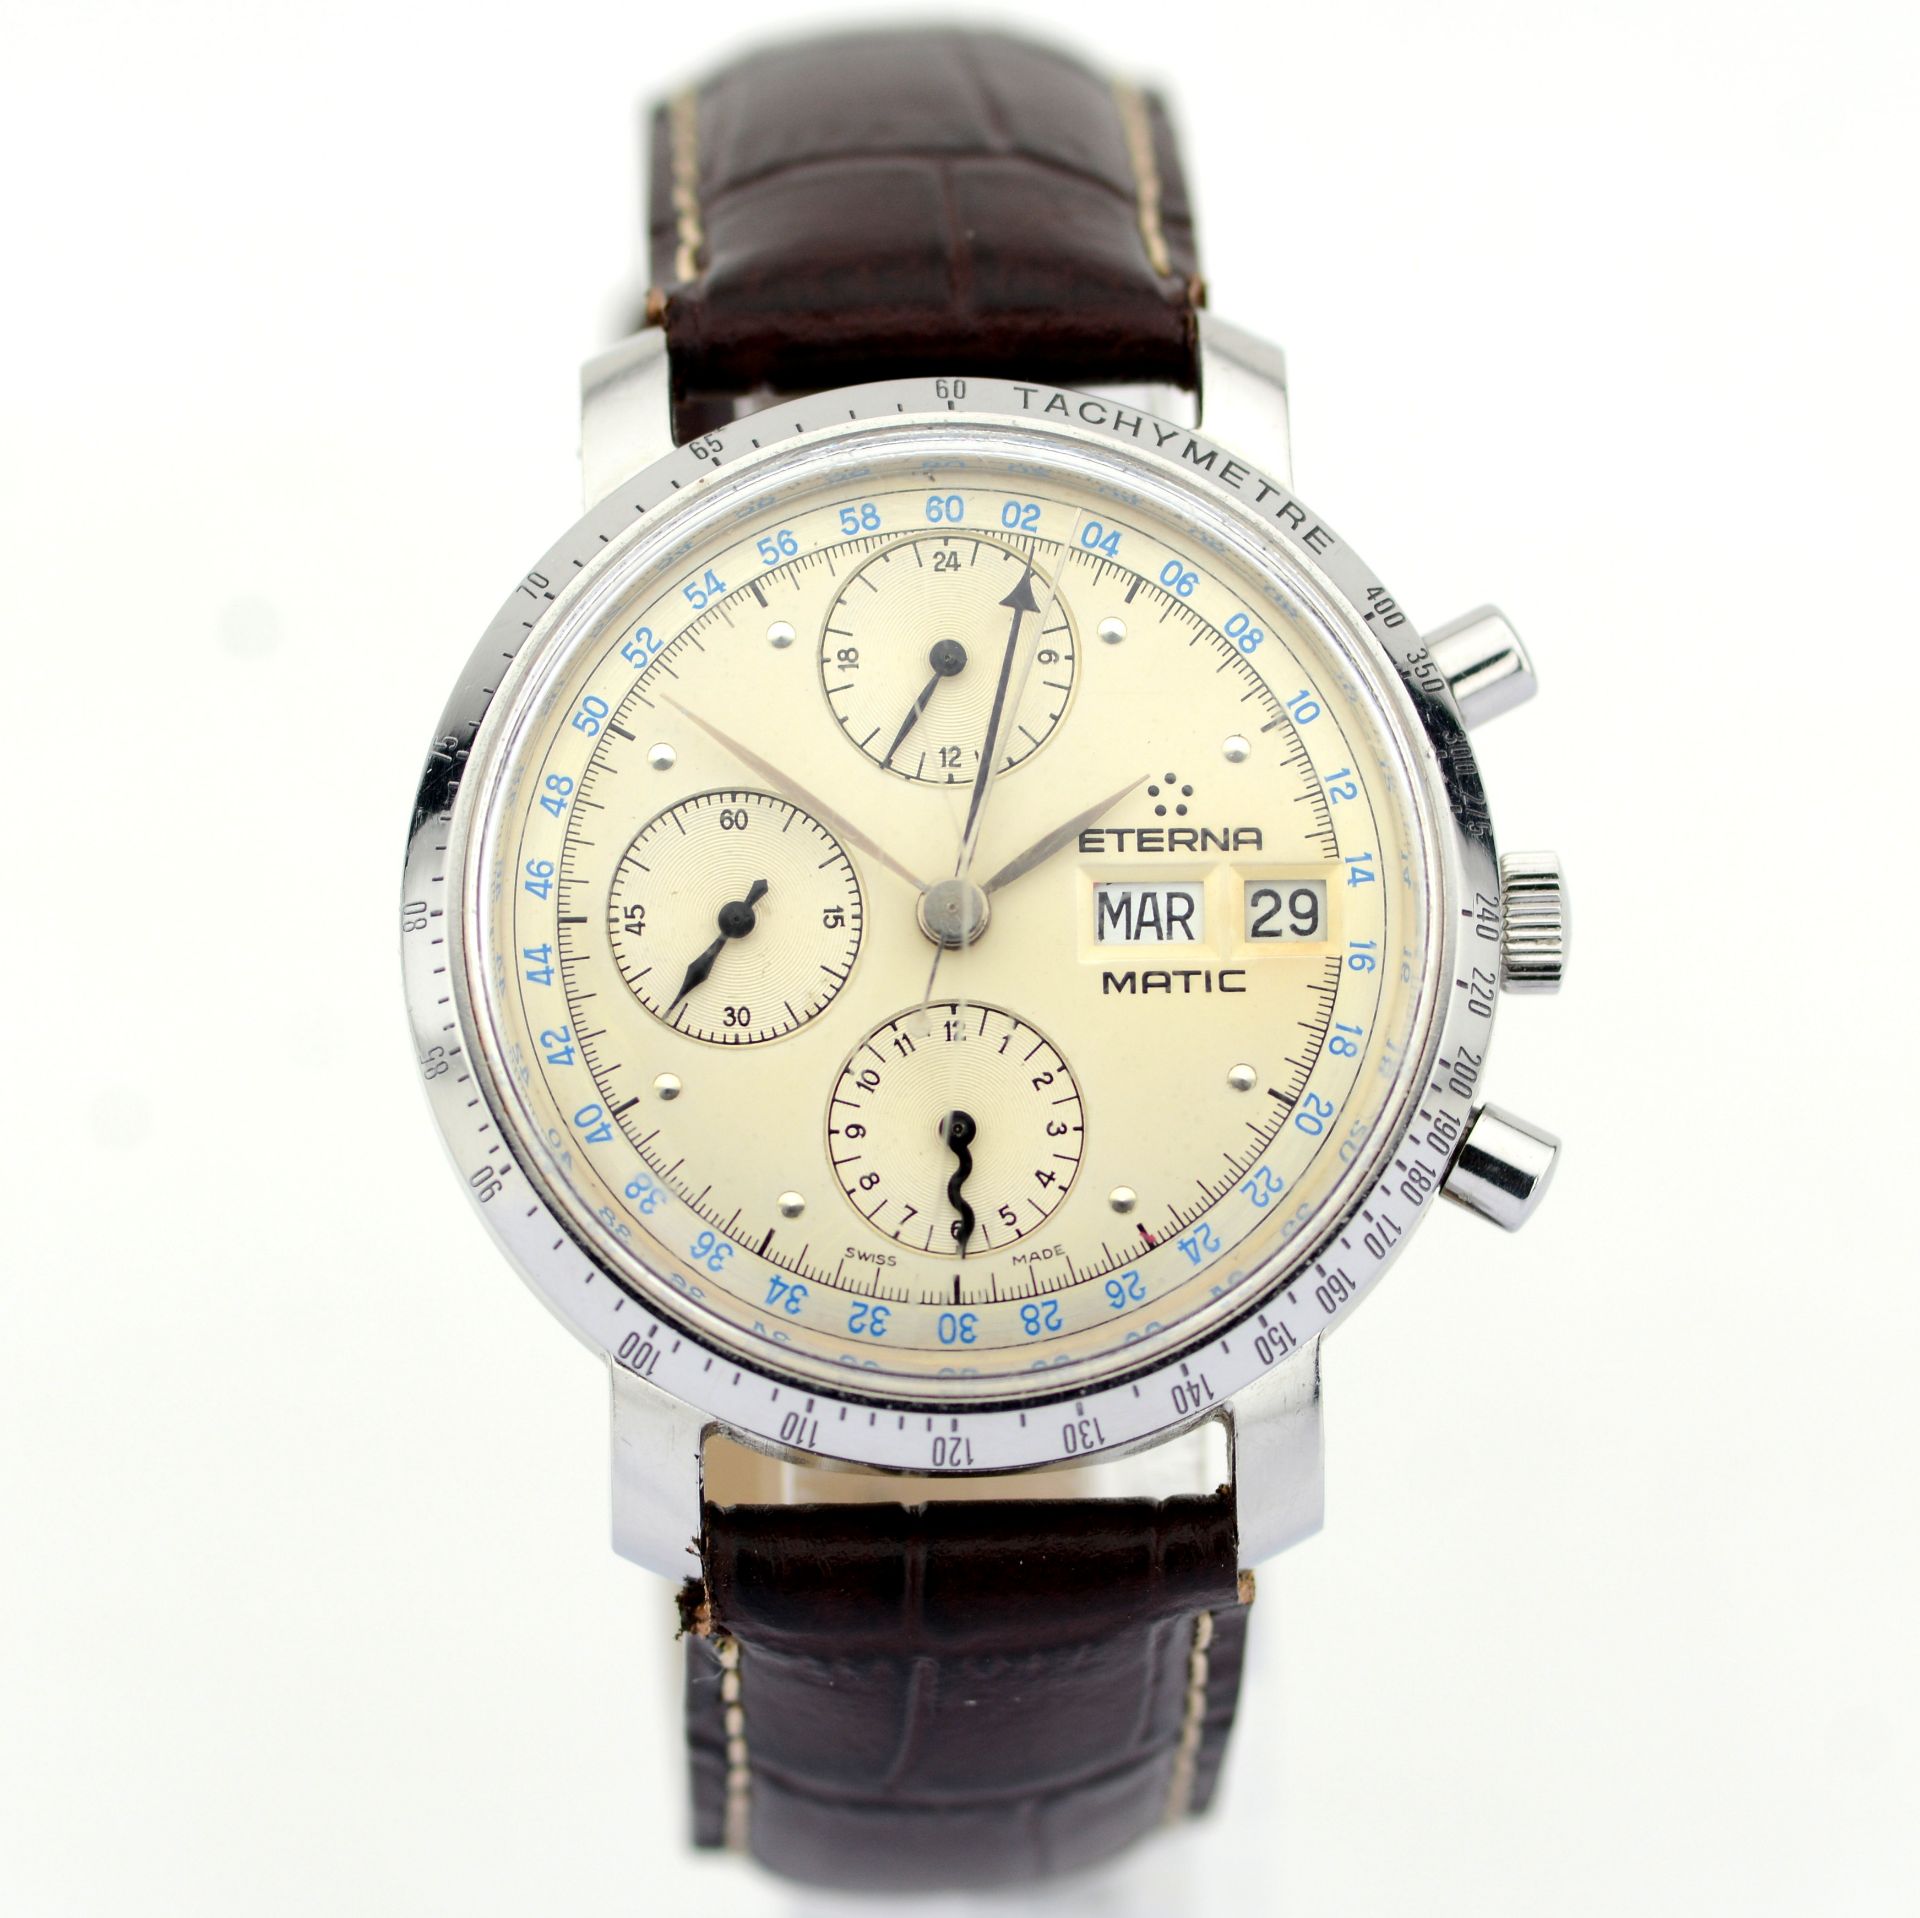 Eterna-Matic / Vintage Chronograph Automatic Day - Date - Gentlmen's Steel Wrist Watch - Image 3 of 10